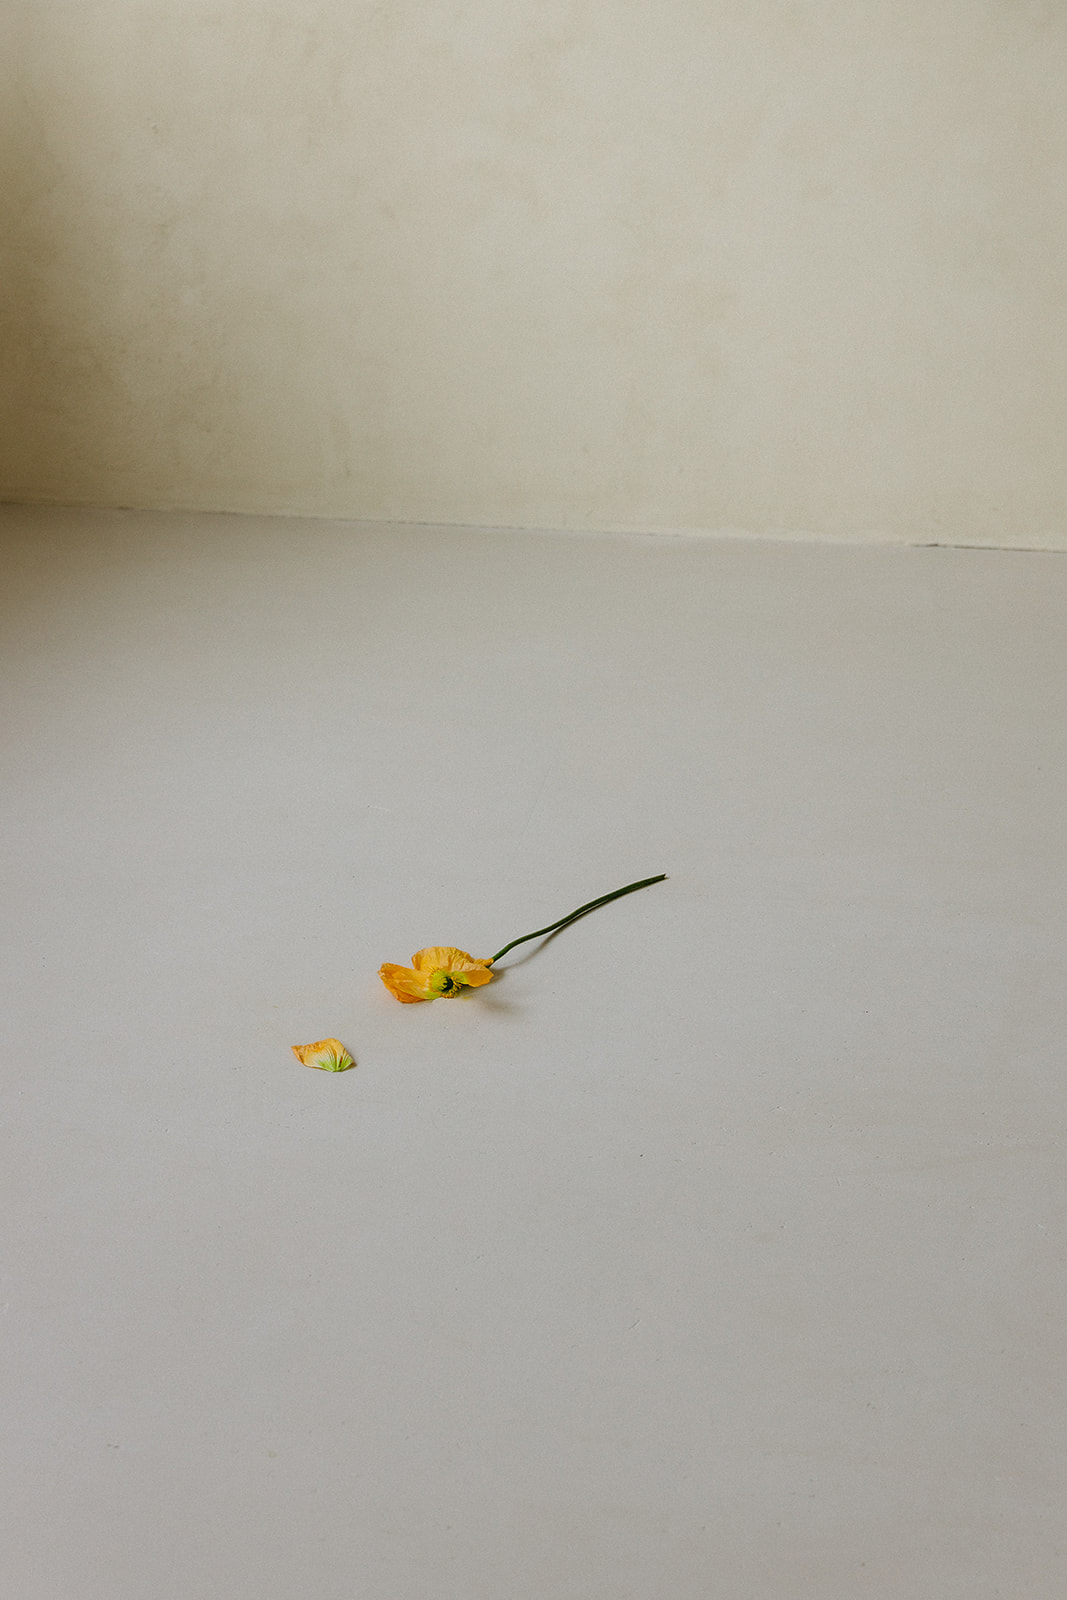 lost poppy on the floor